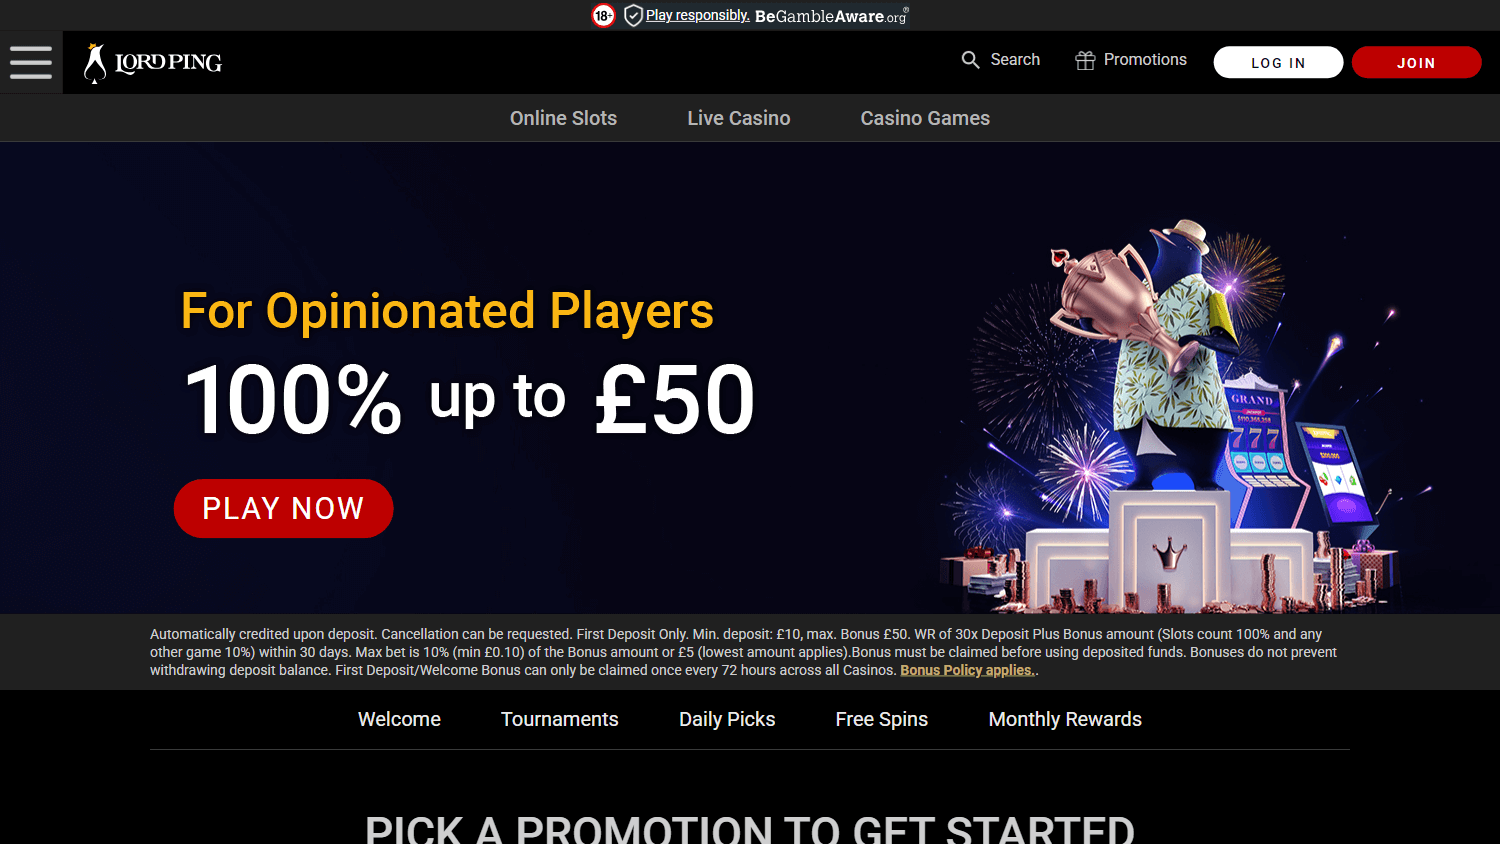 lord_ping_casino_uk_promotions_desktop